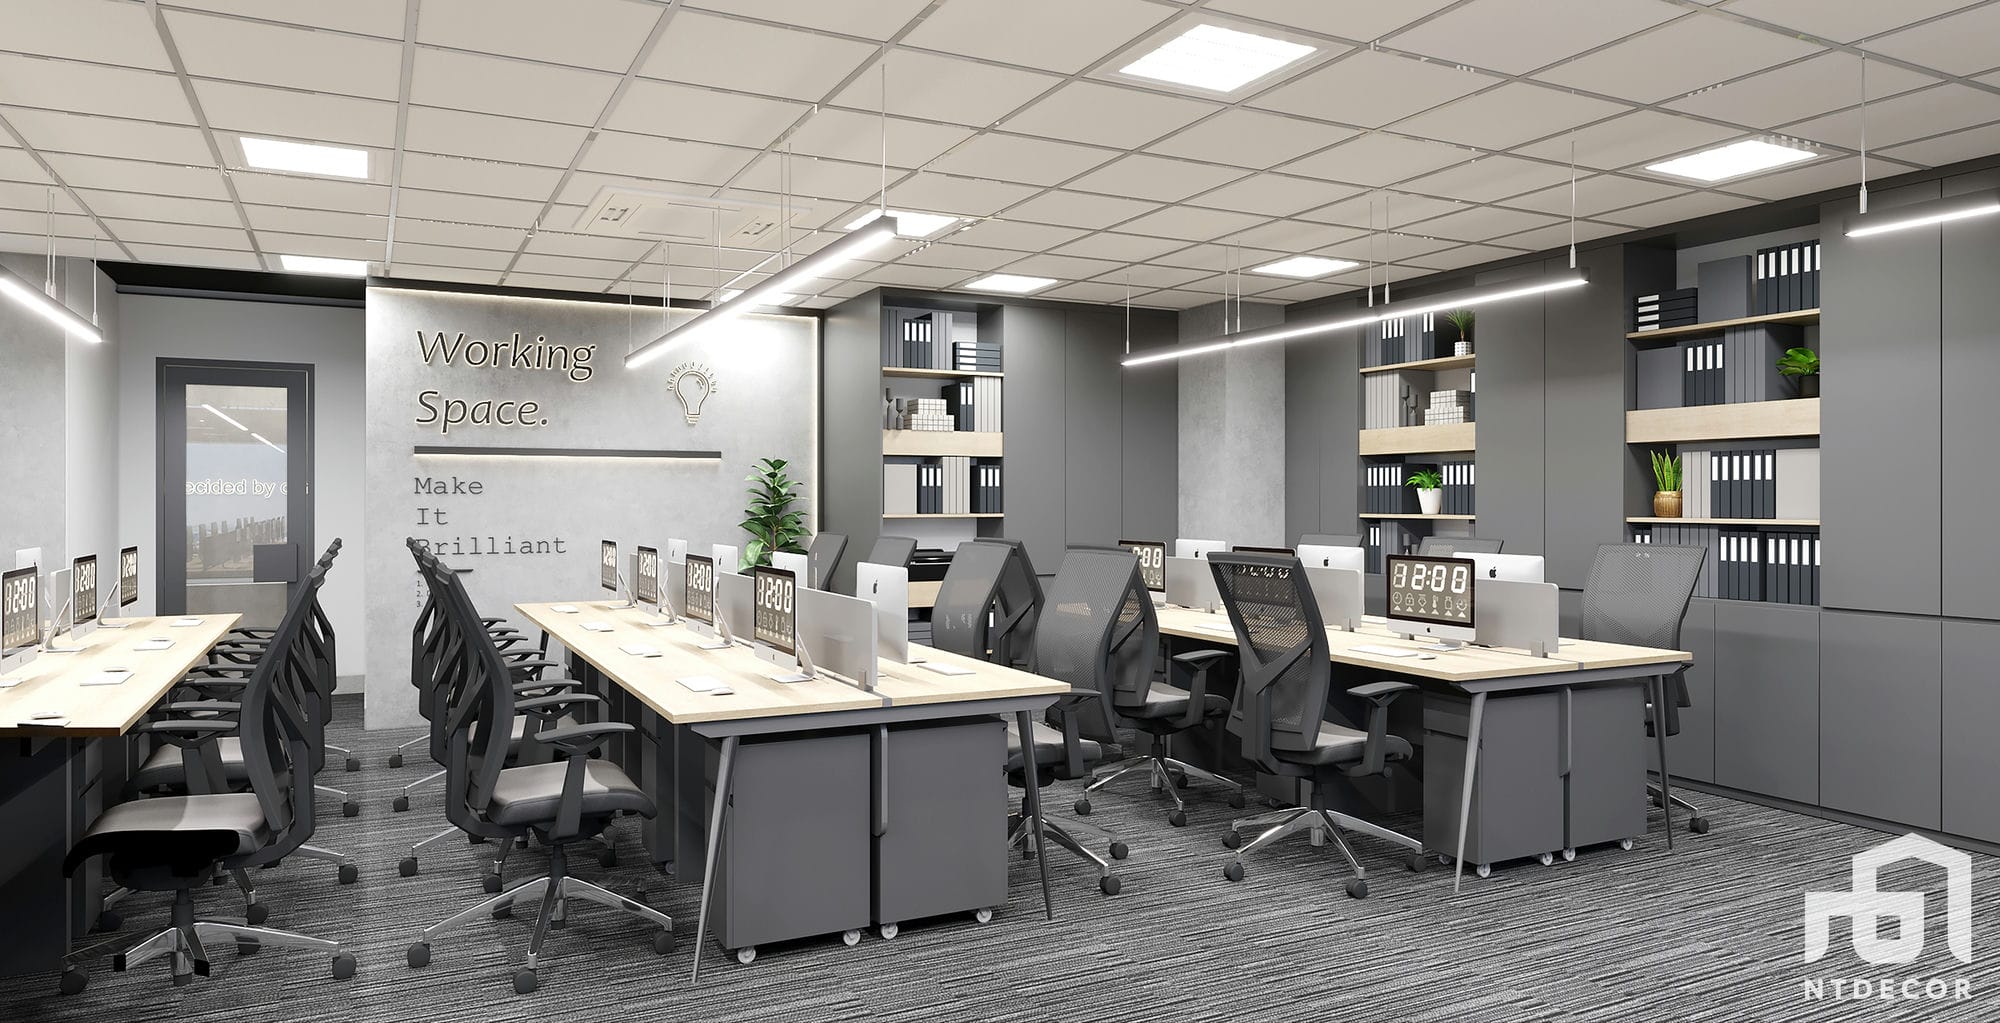 Working Area 3D Design of EG Vietnam Office | NTDecor